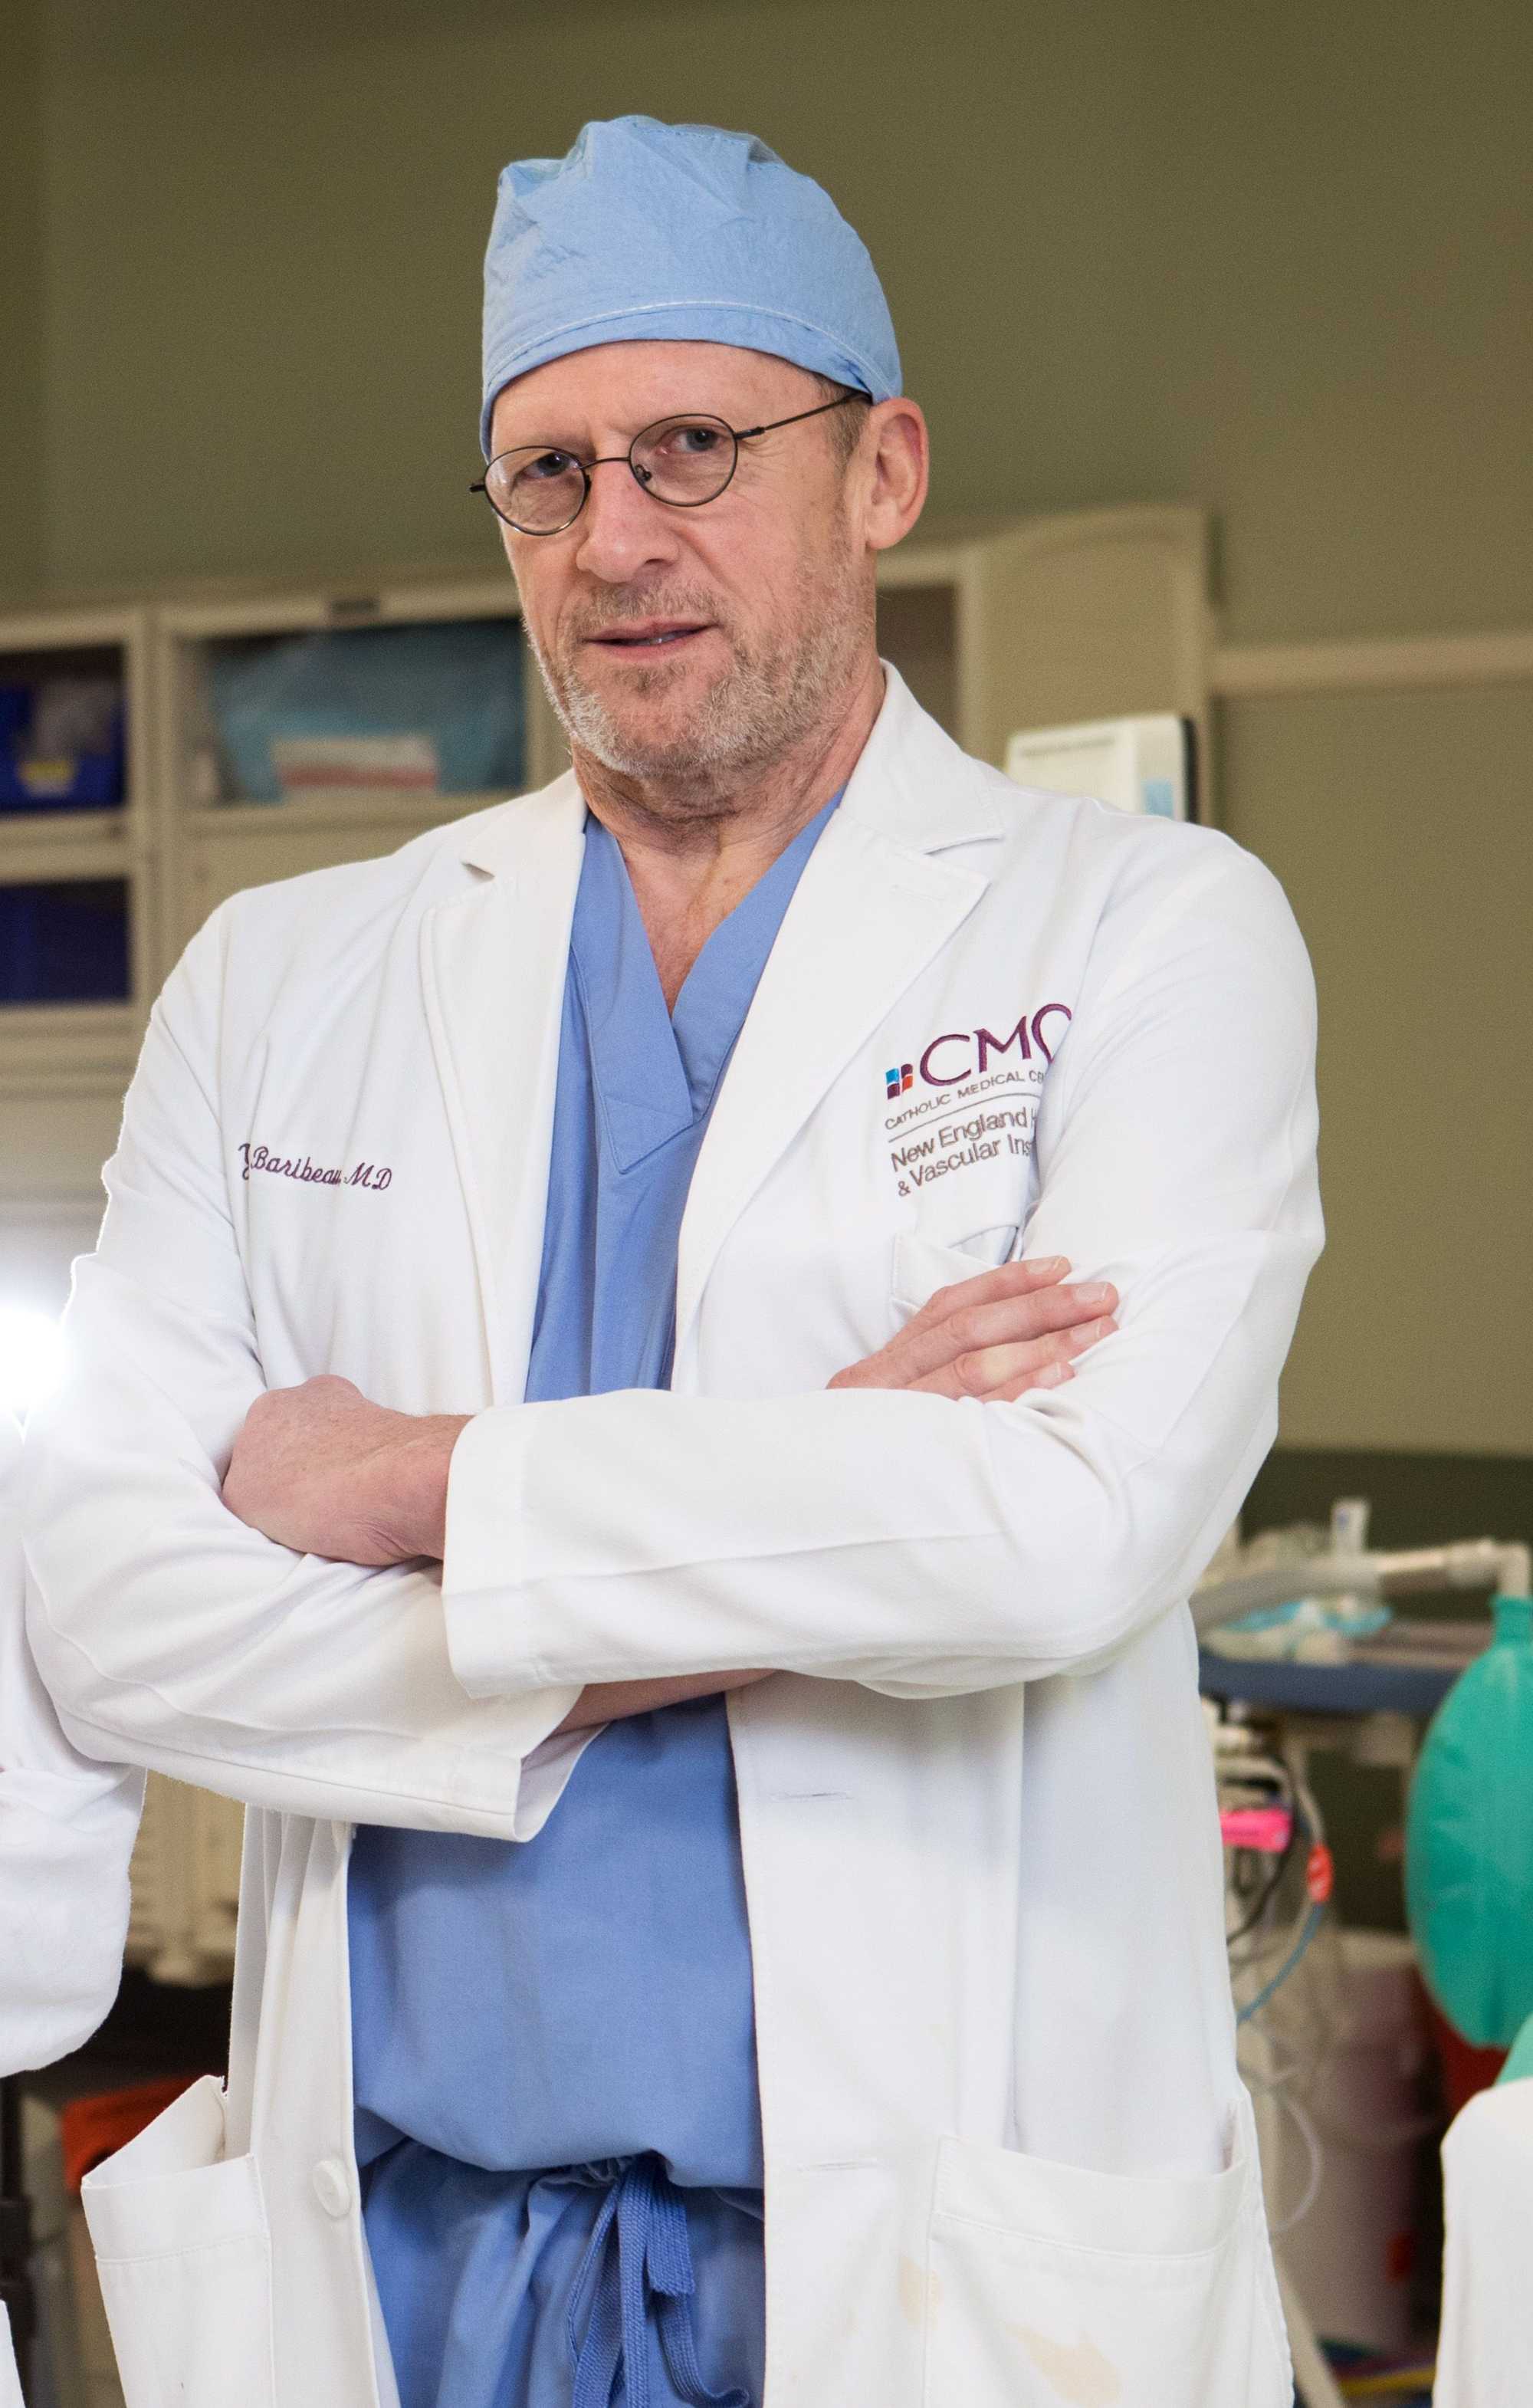 Dr. Baribeau at Catholic Medical Center in 2017.